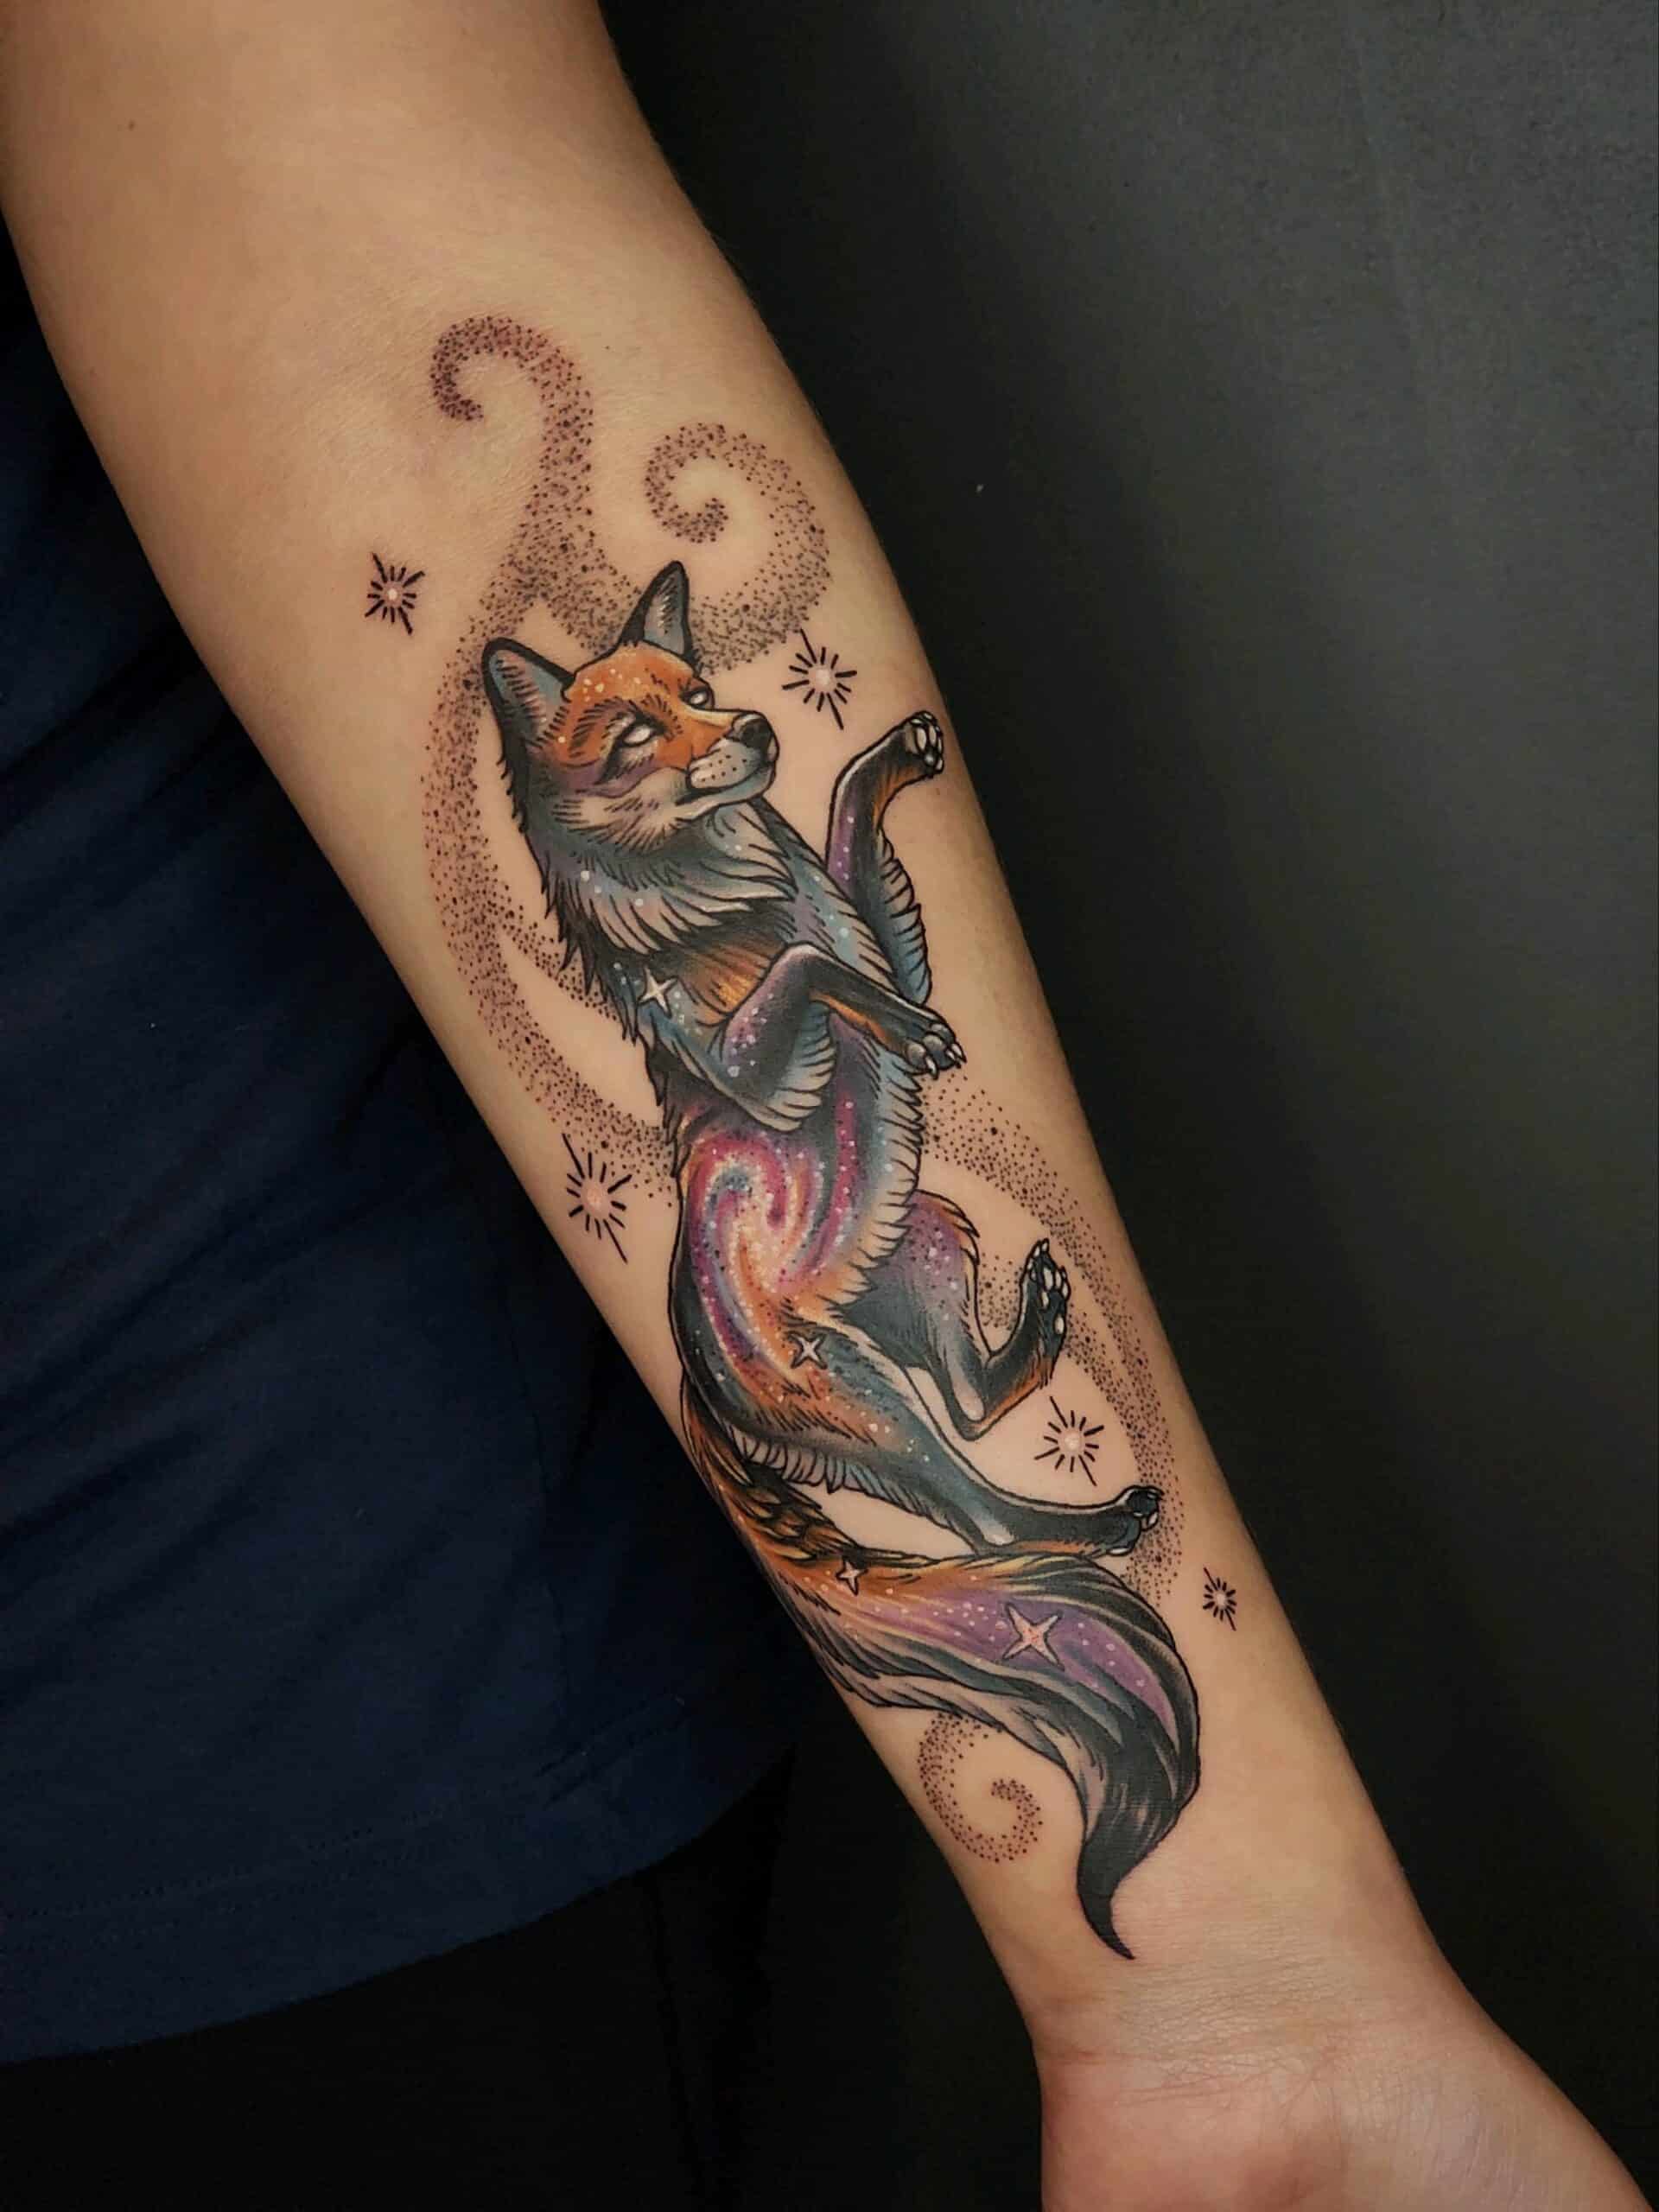 Celestial Kitsune Tattoo